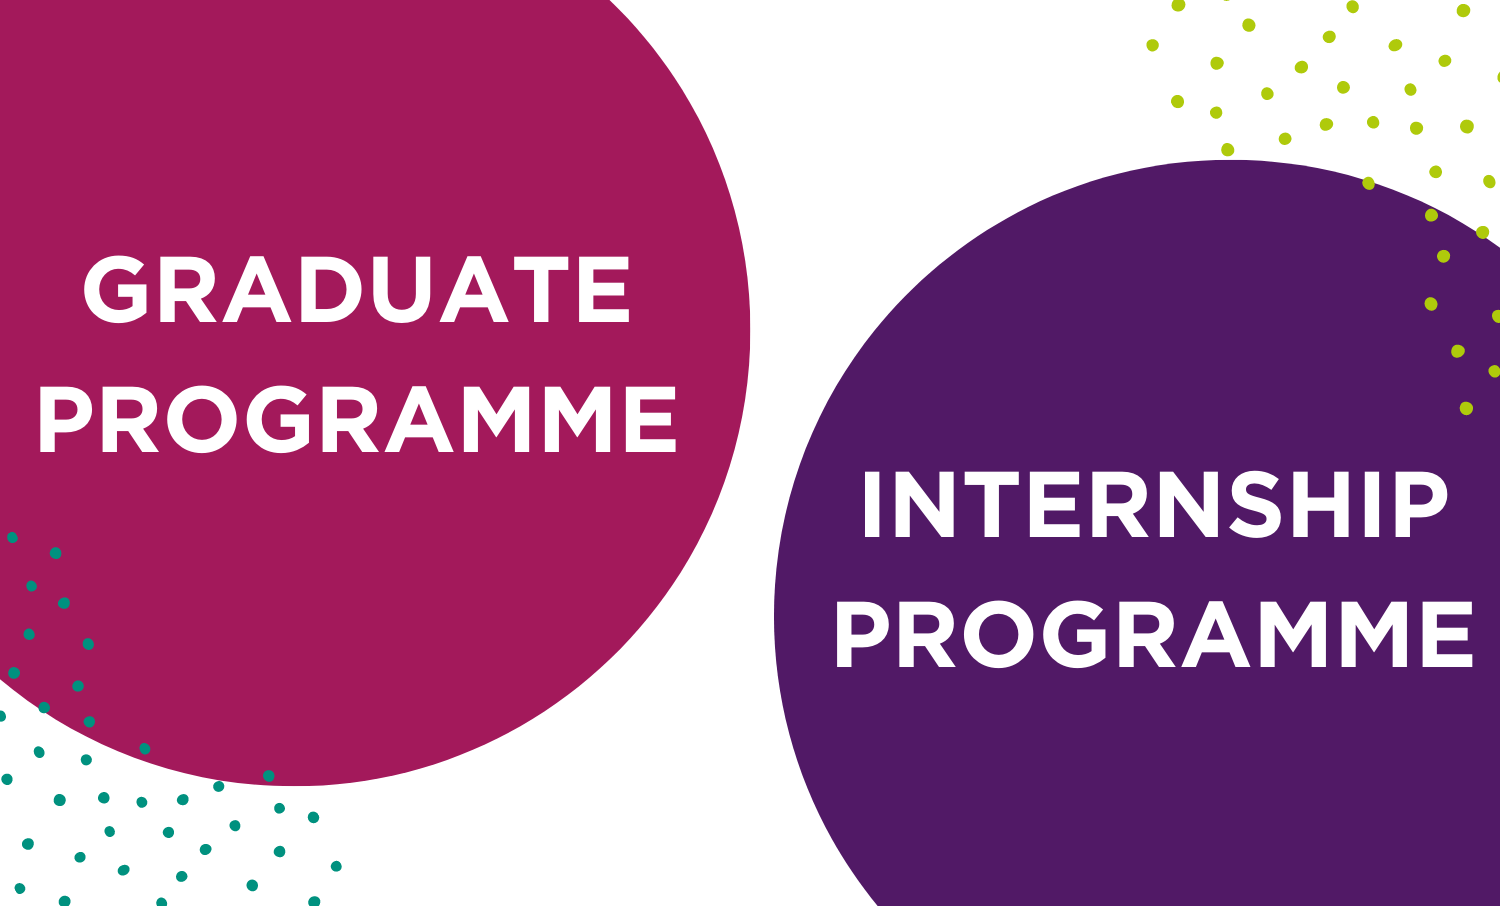 Graduate and Internship Programme inside crimson and purple circles